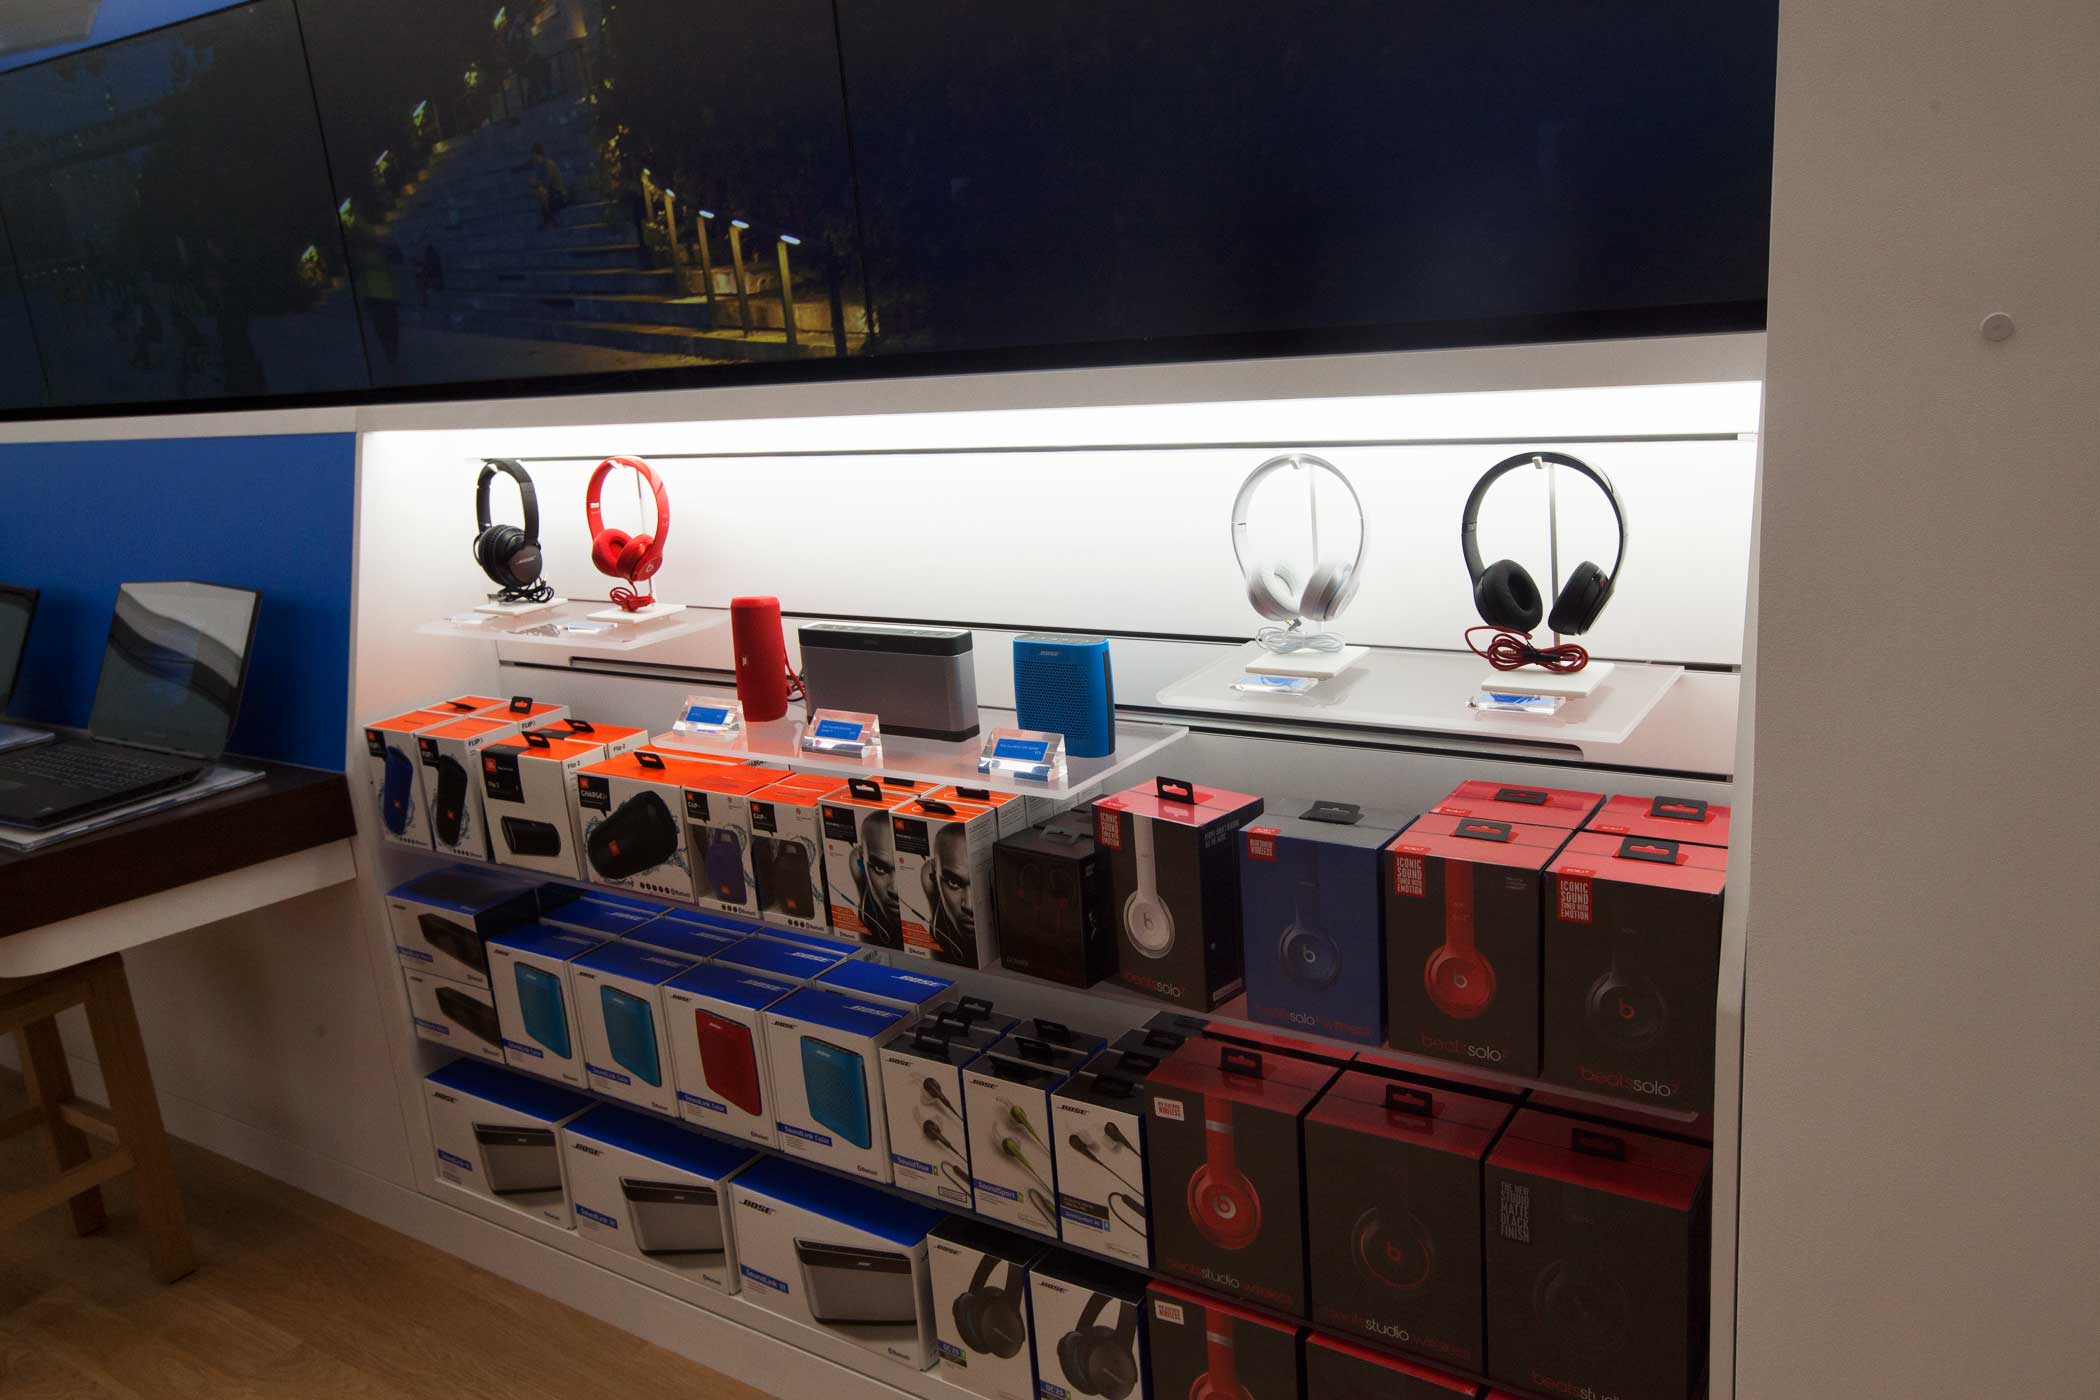 Microsoft Store Headphones on sale.